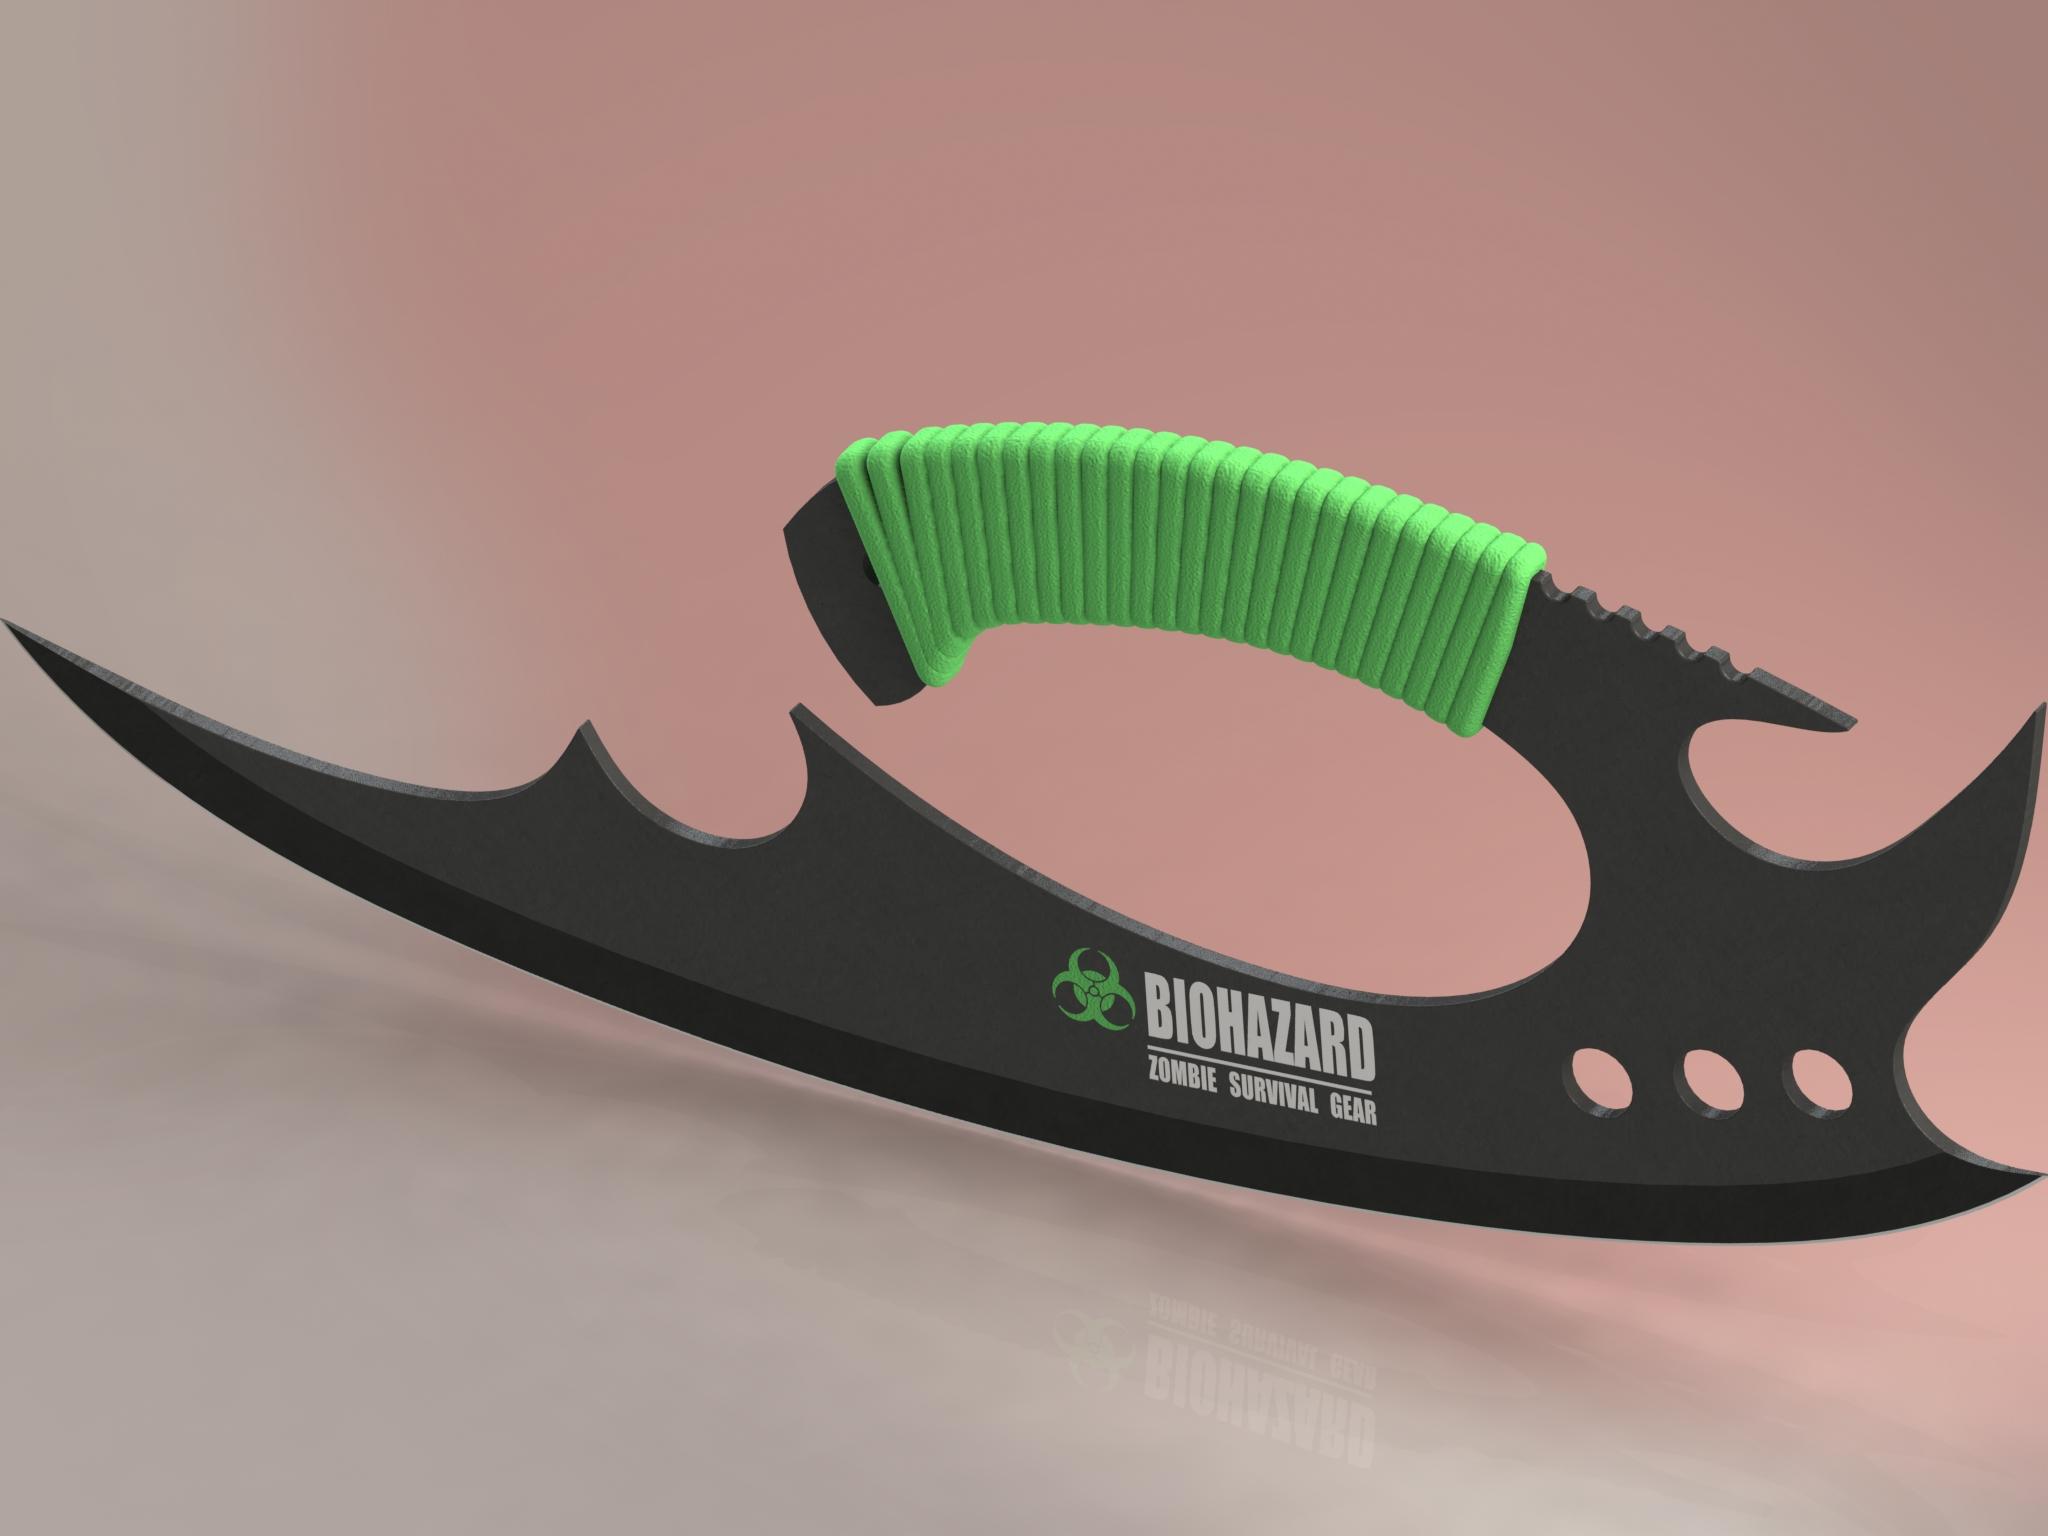 Biohazard knife (Cuchillo biohazard) 3d model